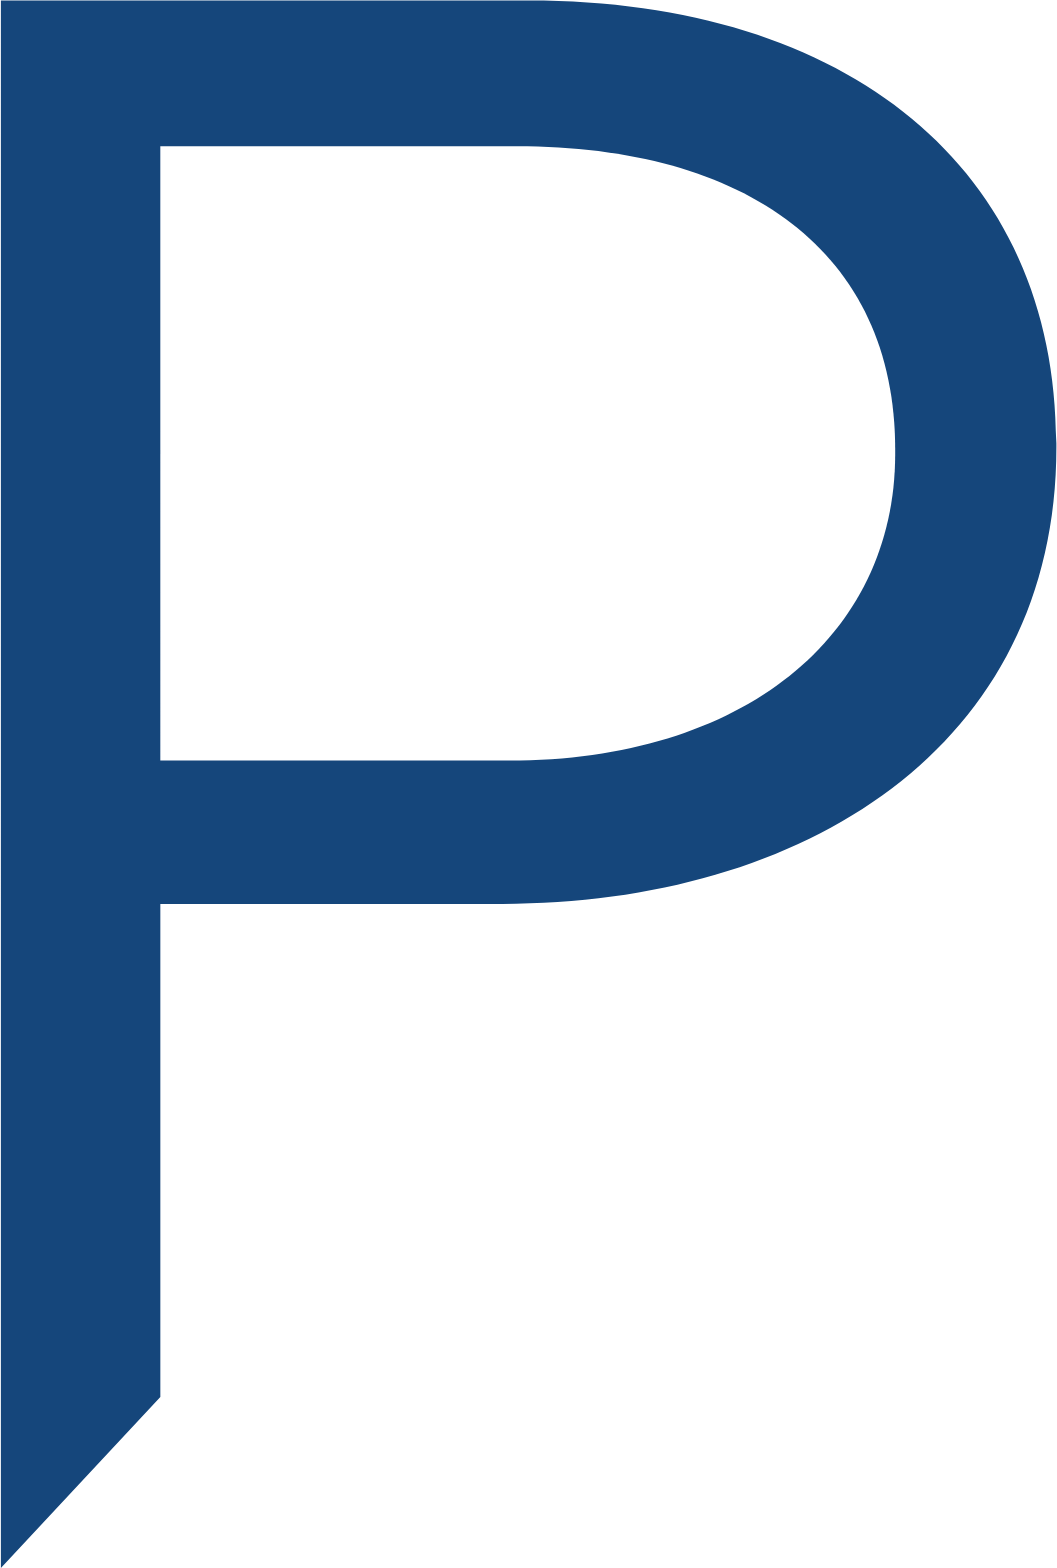 Playa Hotels & Resorts logo (transparent PNG)